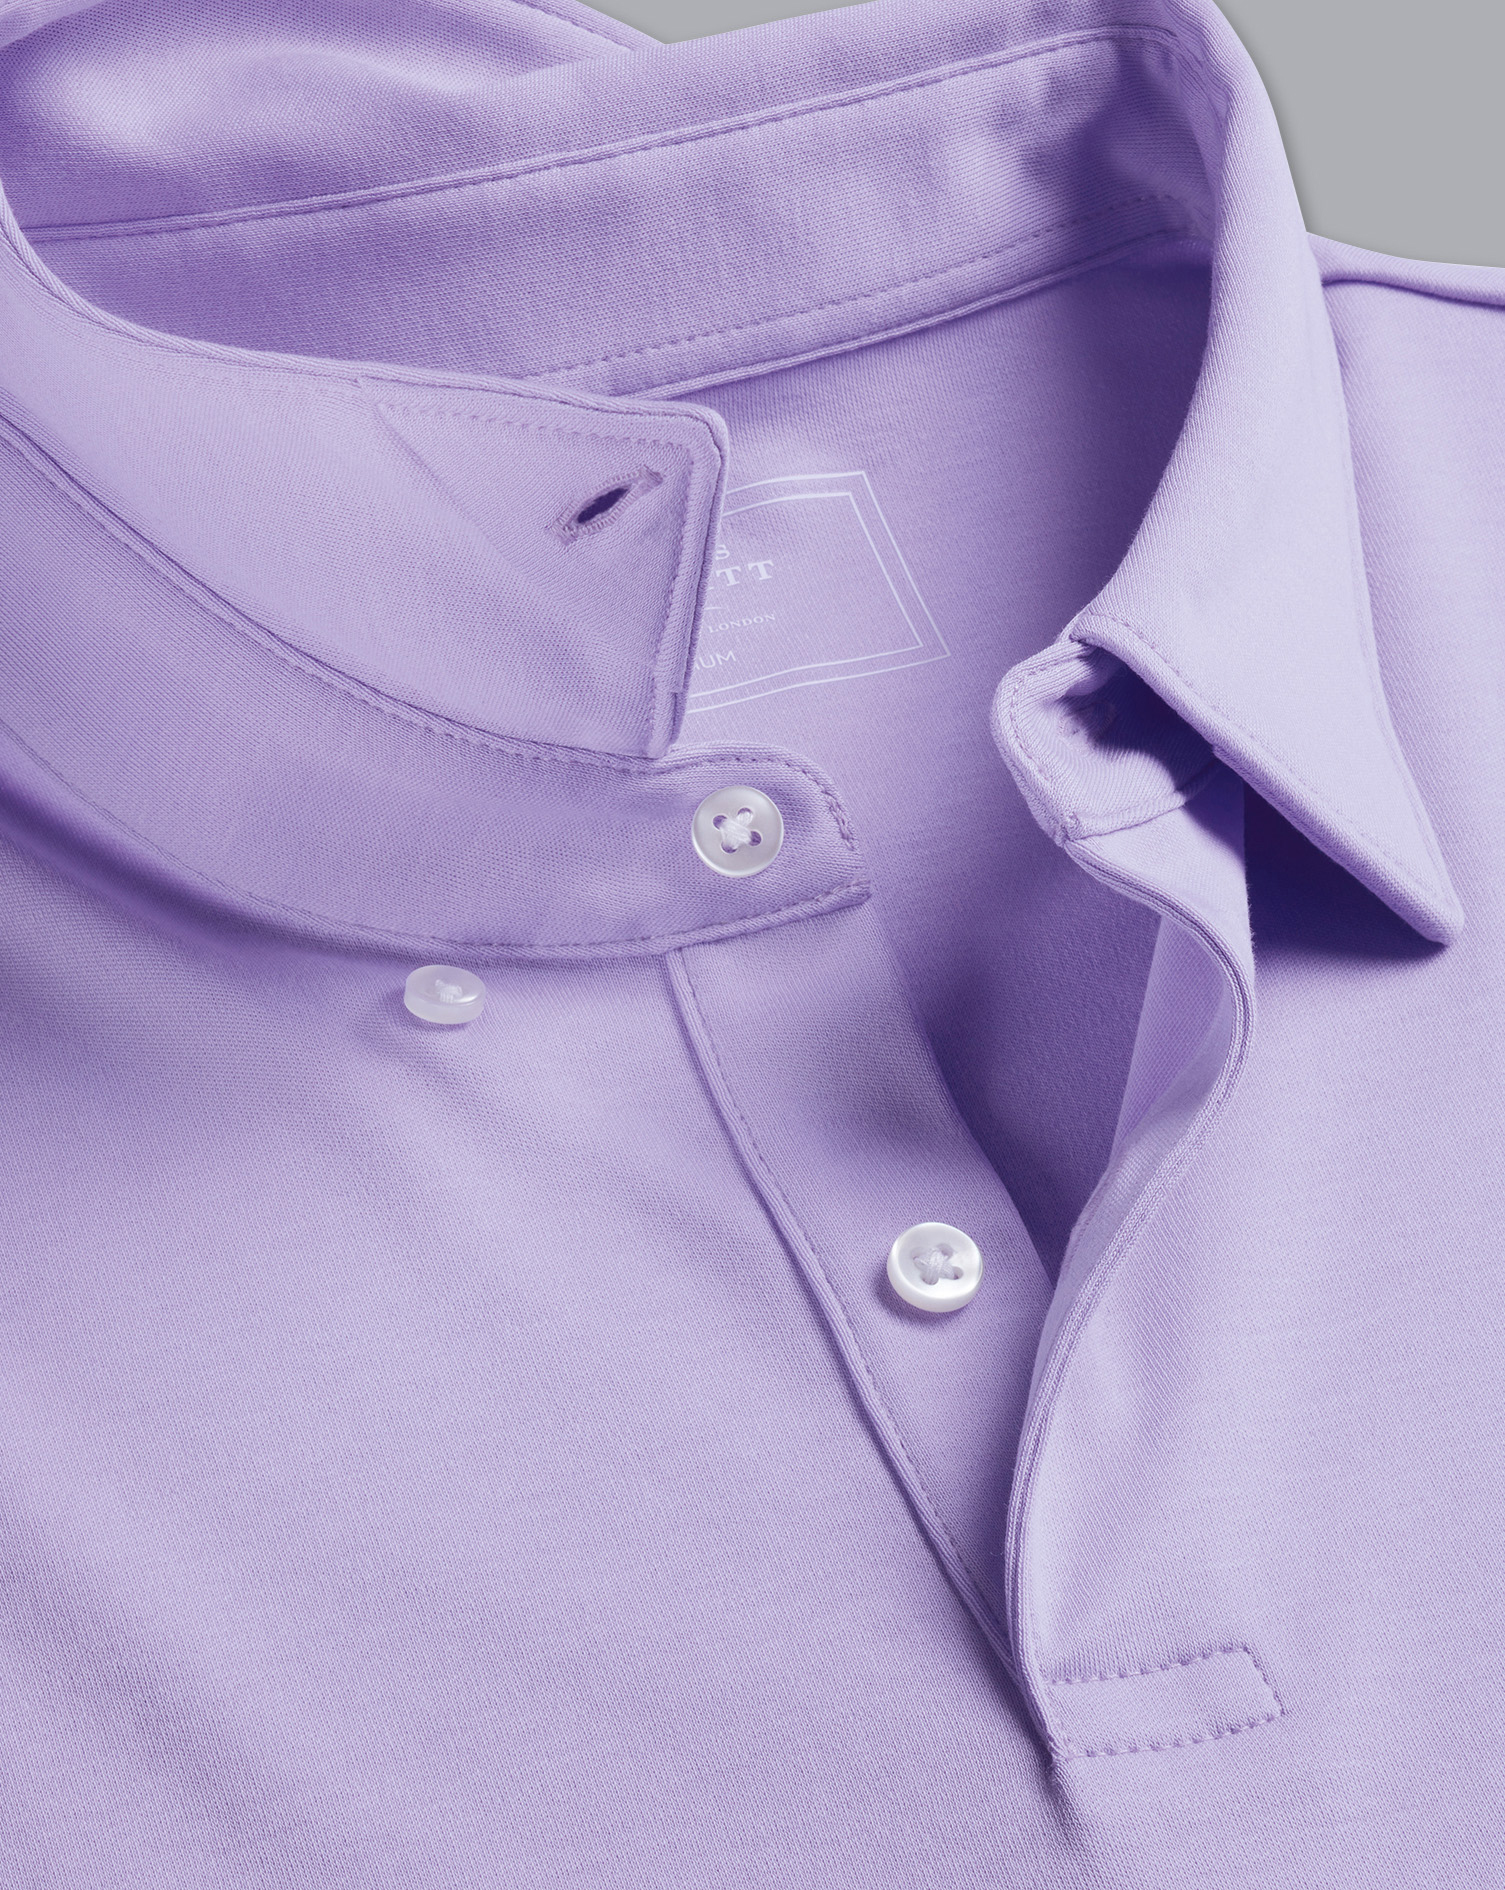 Smart Jersey Cotton Polo - Lilac Purple Size Small
